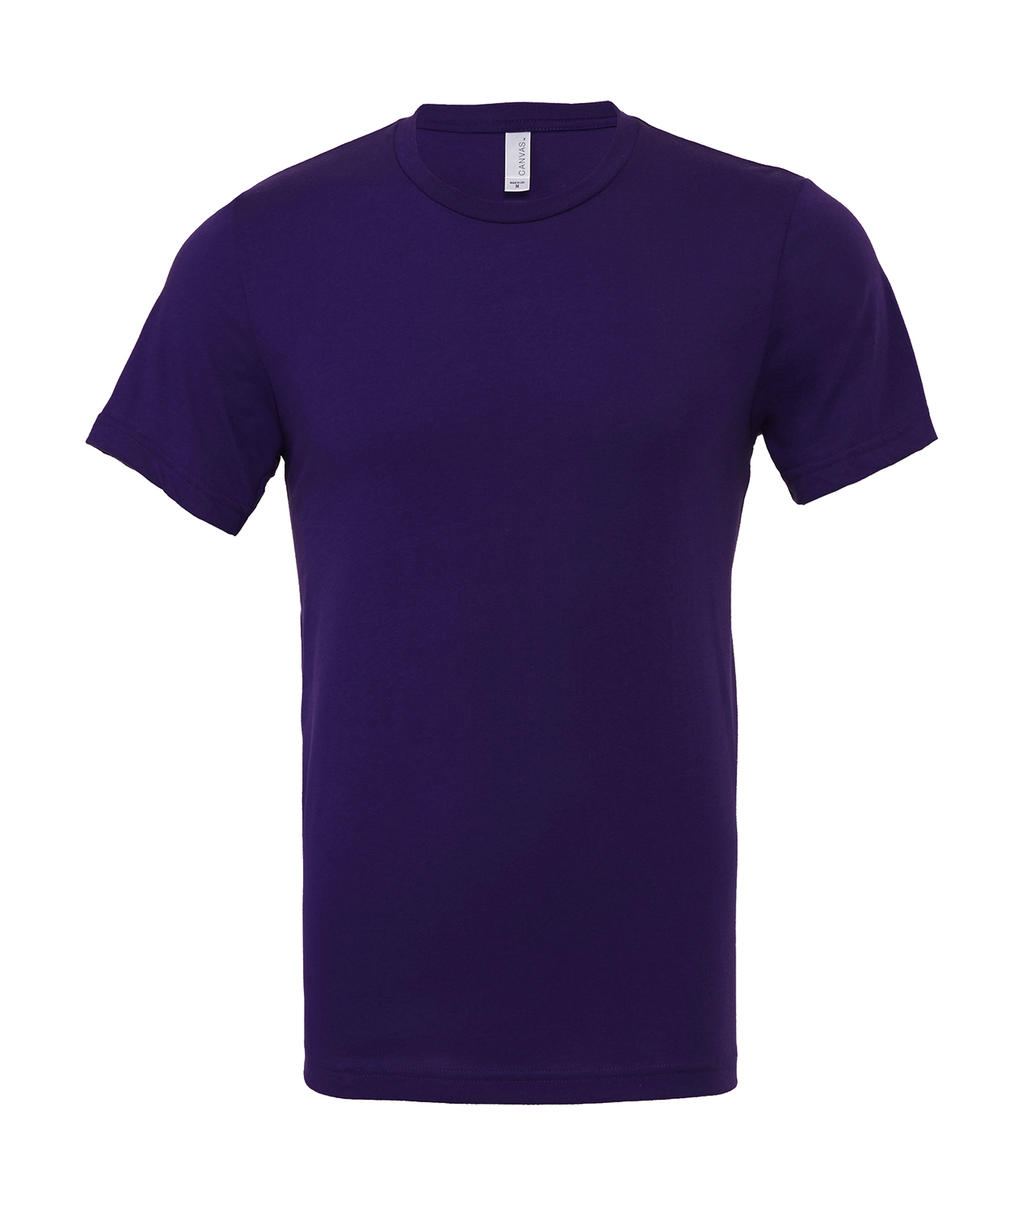  Unisex Jersey Short Sleeve Tee in Farbe Team Purple